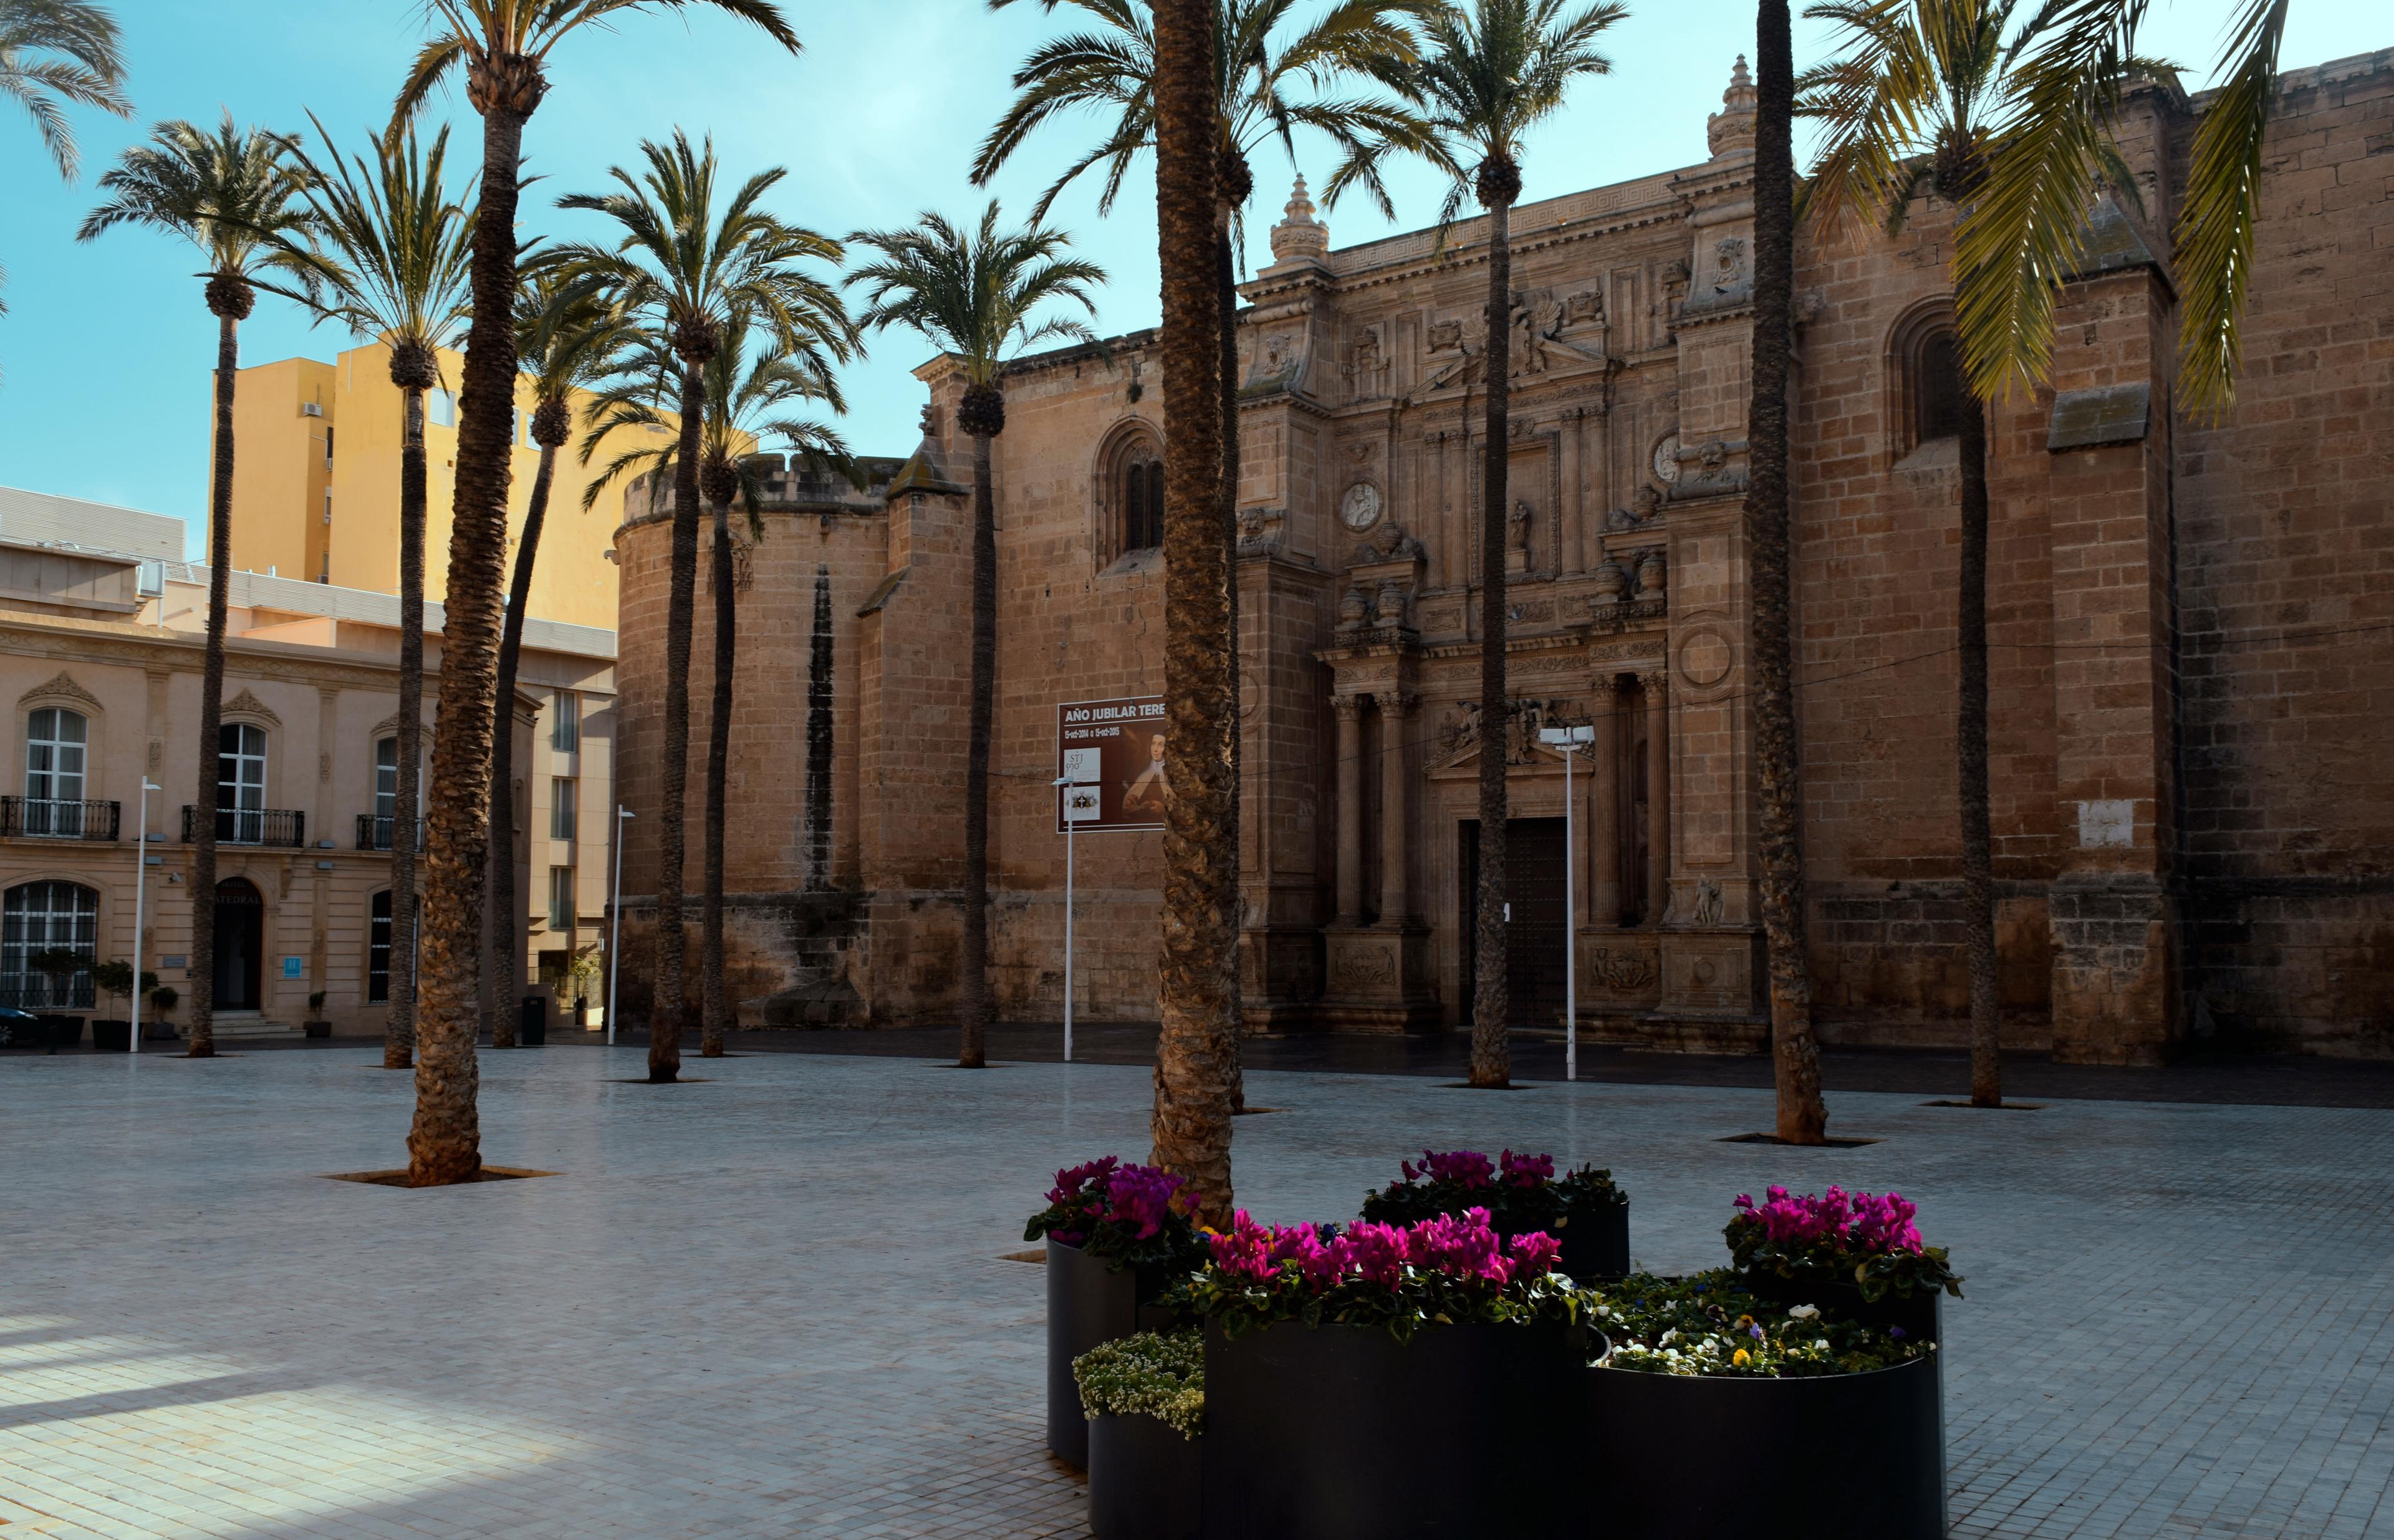 Cover image of this place Catedral de Almería